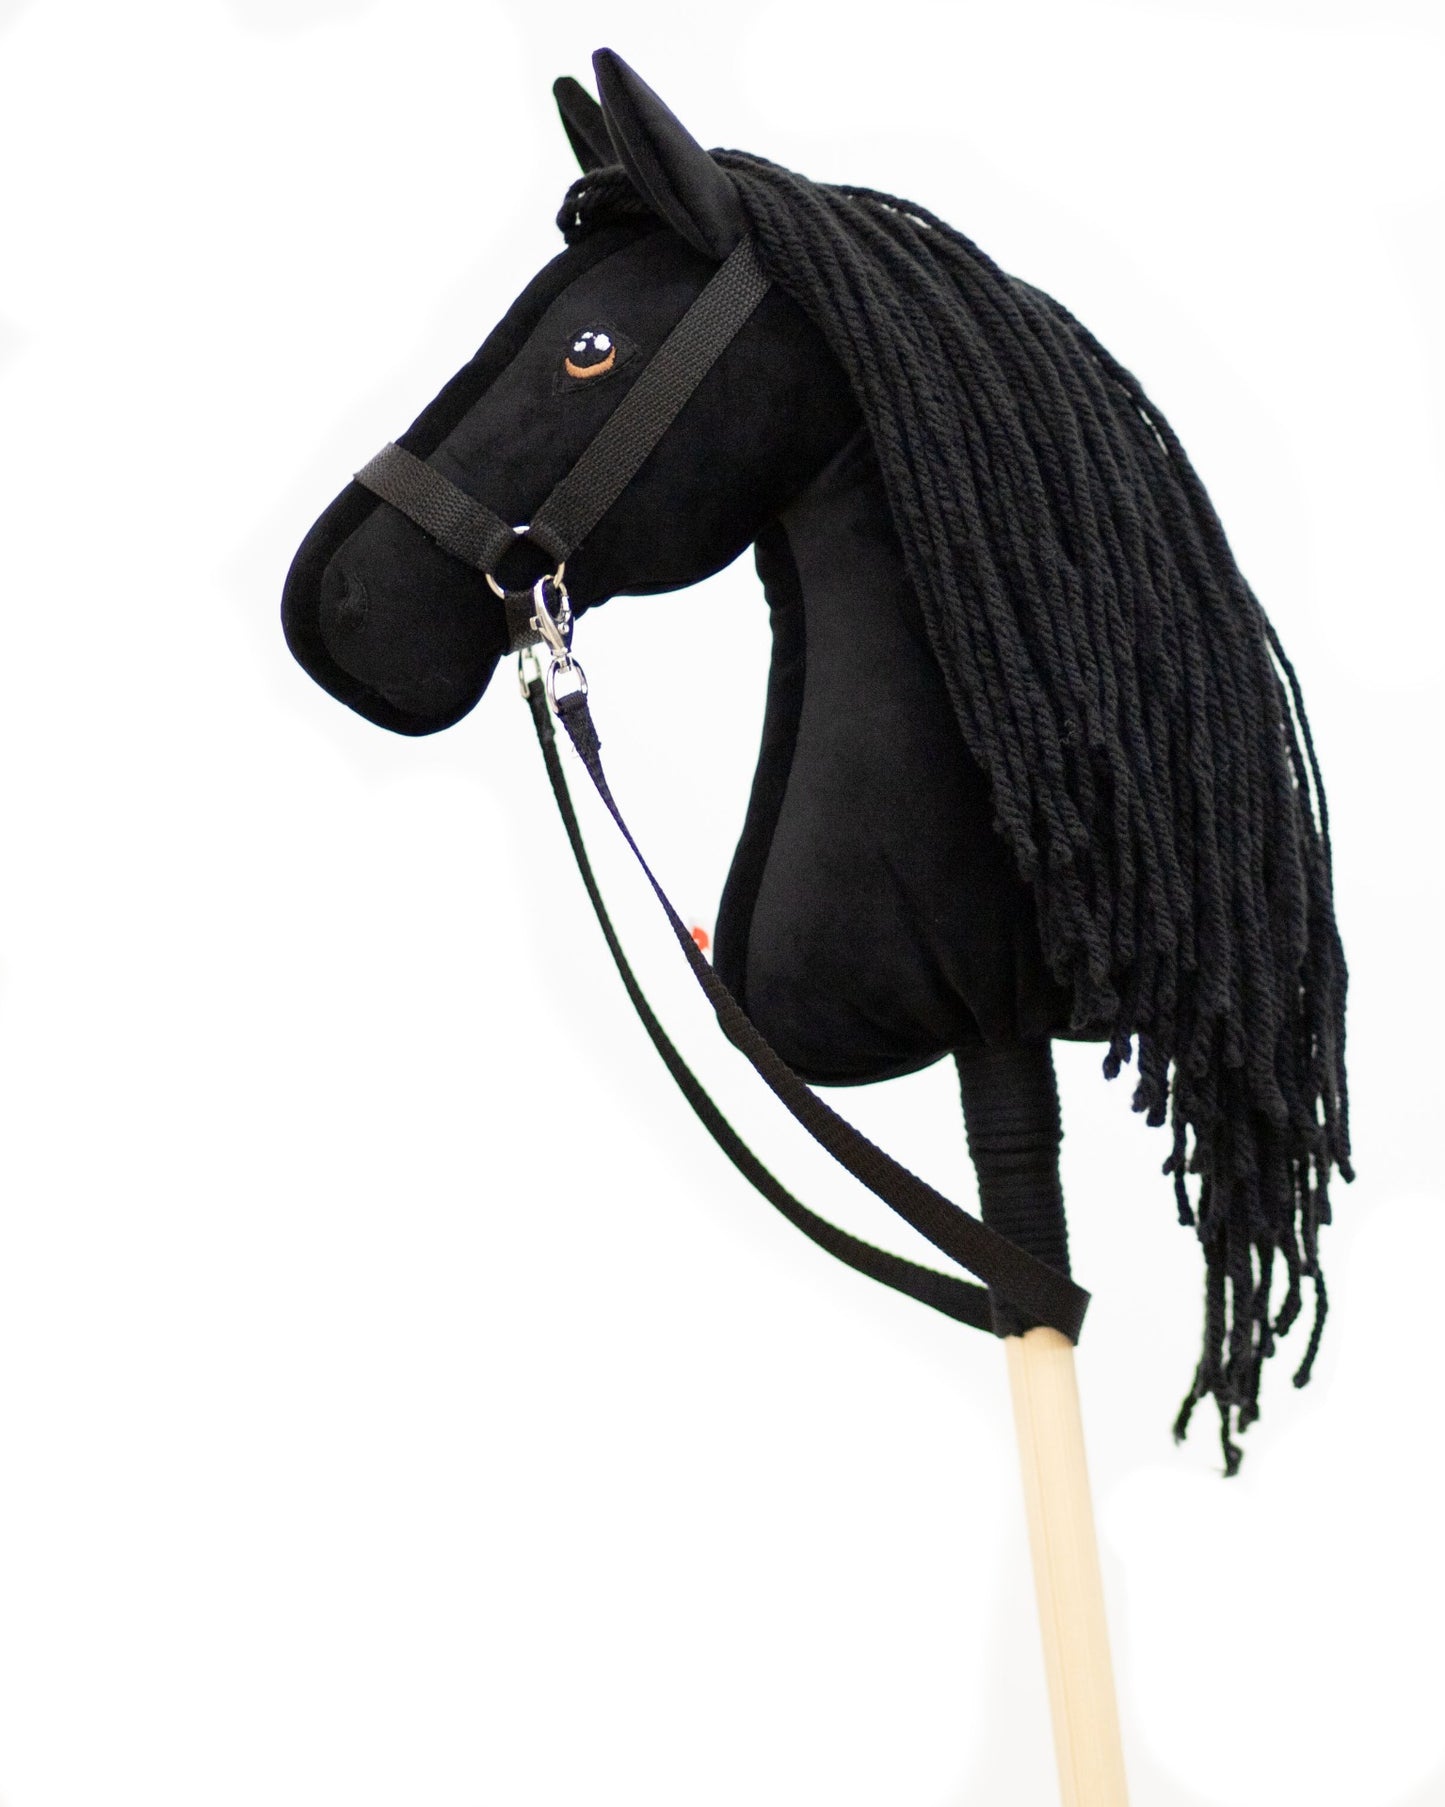 Black Moon - Black mane - Foal